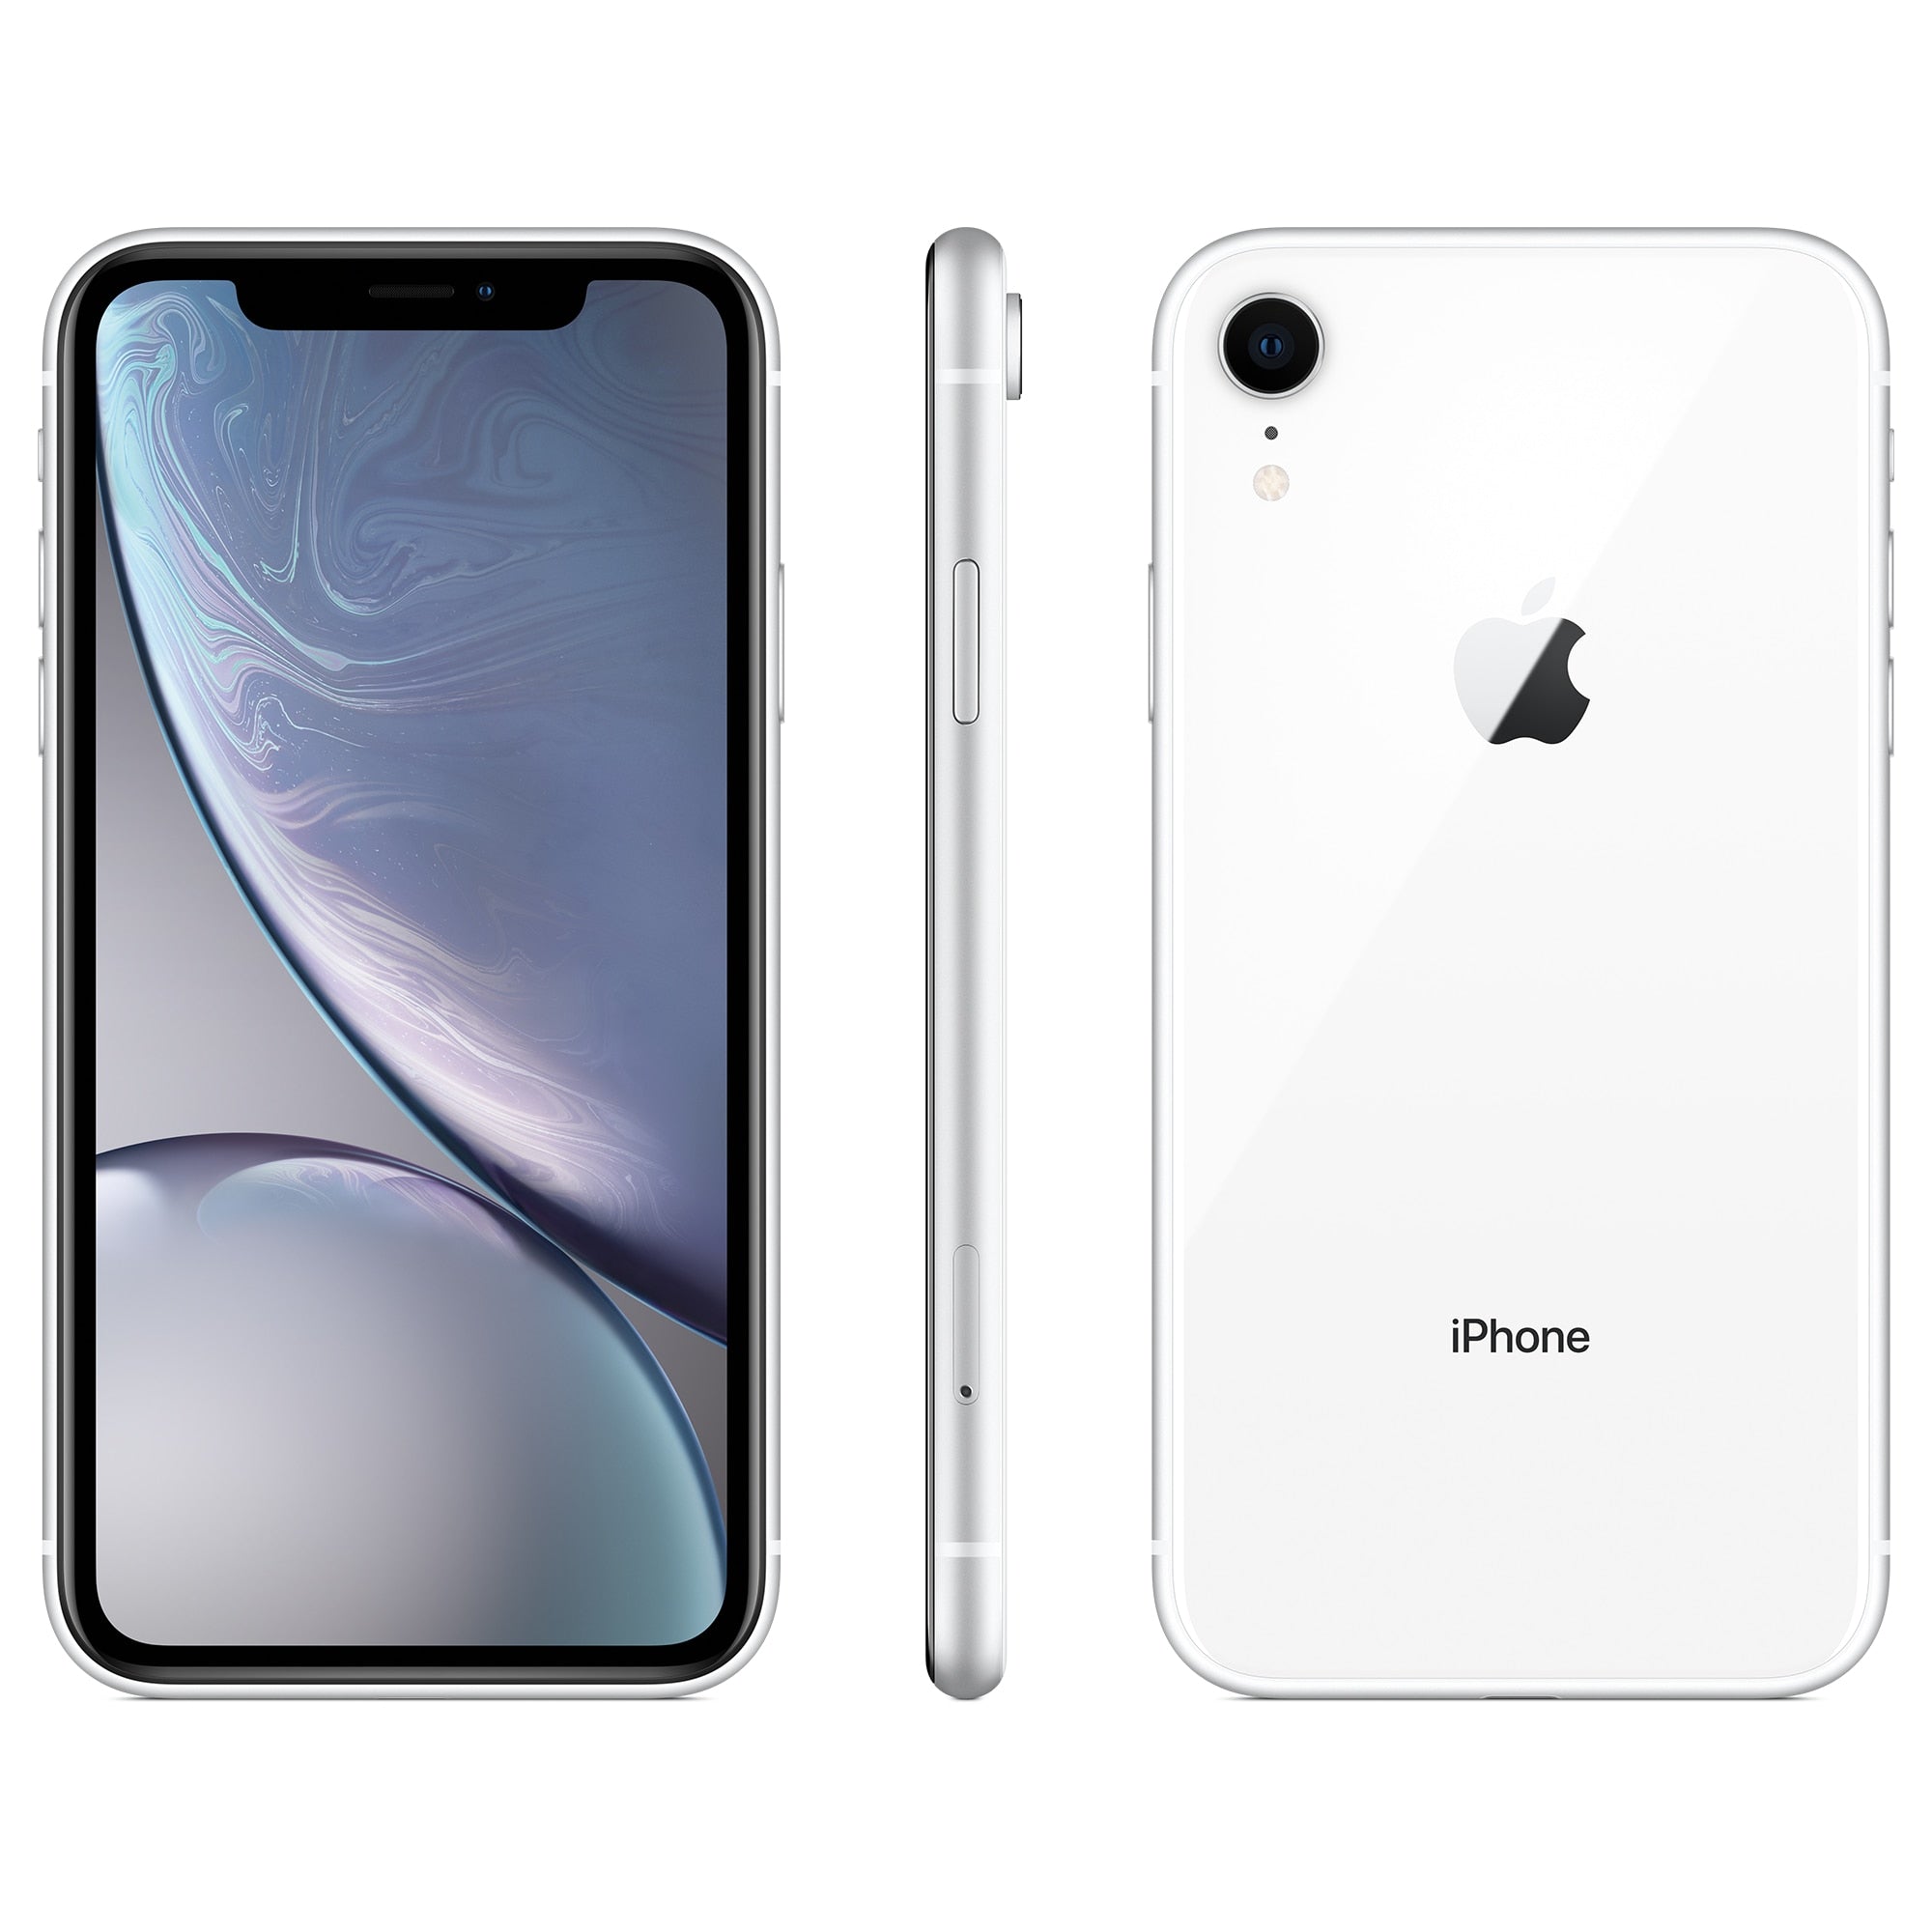 Genuine Original New Apple iPhone XR 6.1" Retina HD Display A12 Bionic FaceID 12MP Rear Camera IOS Smartphone Bluetooth